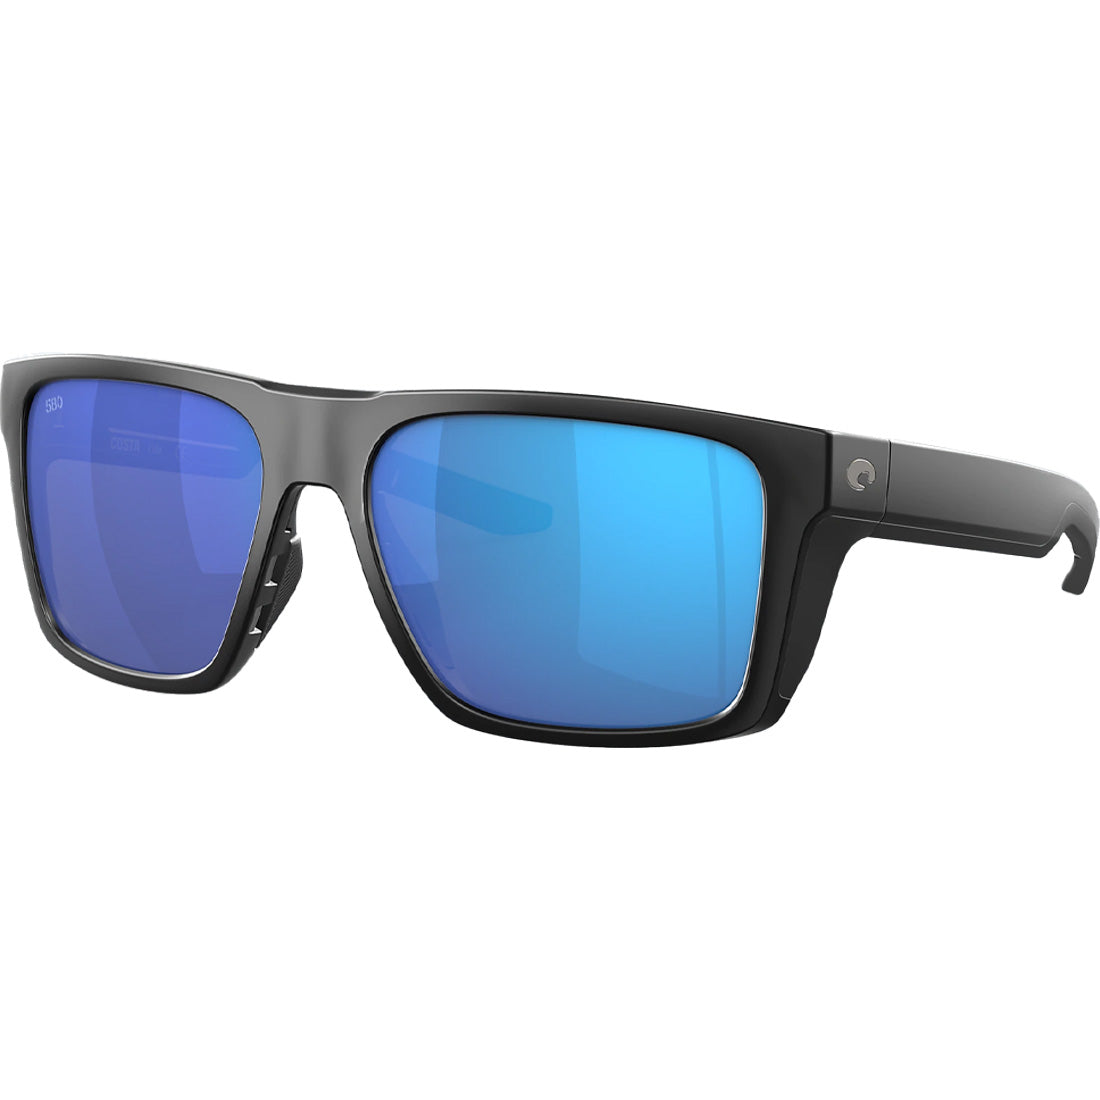 Costa Diego Sunglasses - Flight Sunglasses